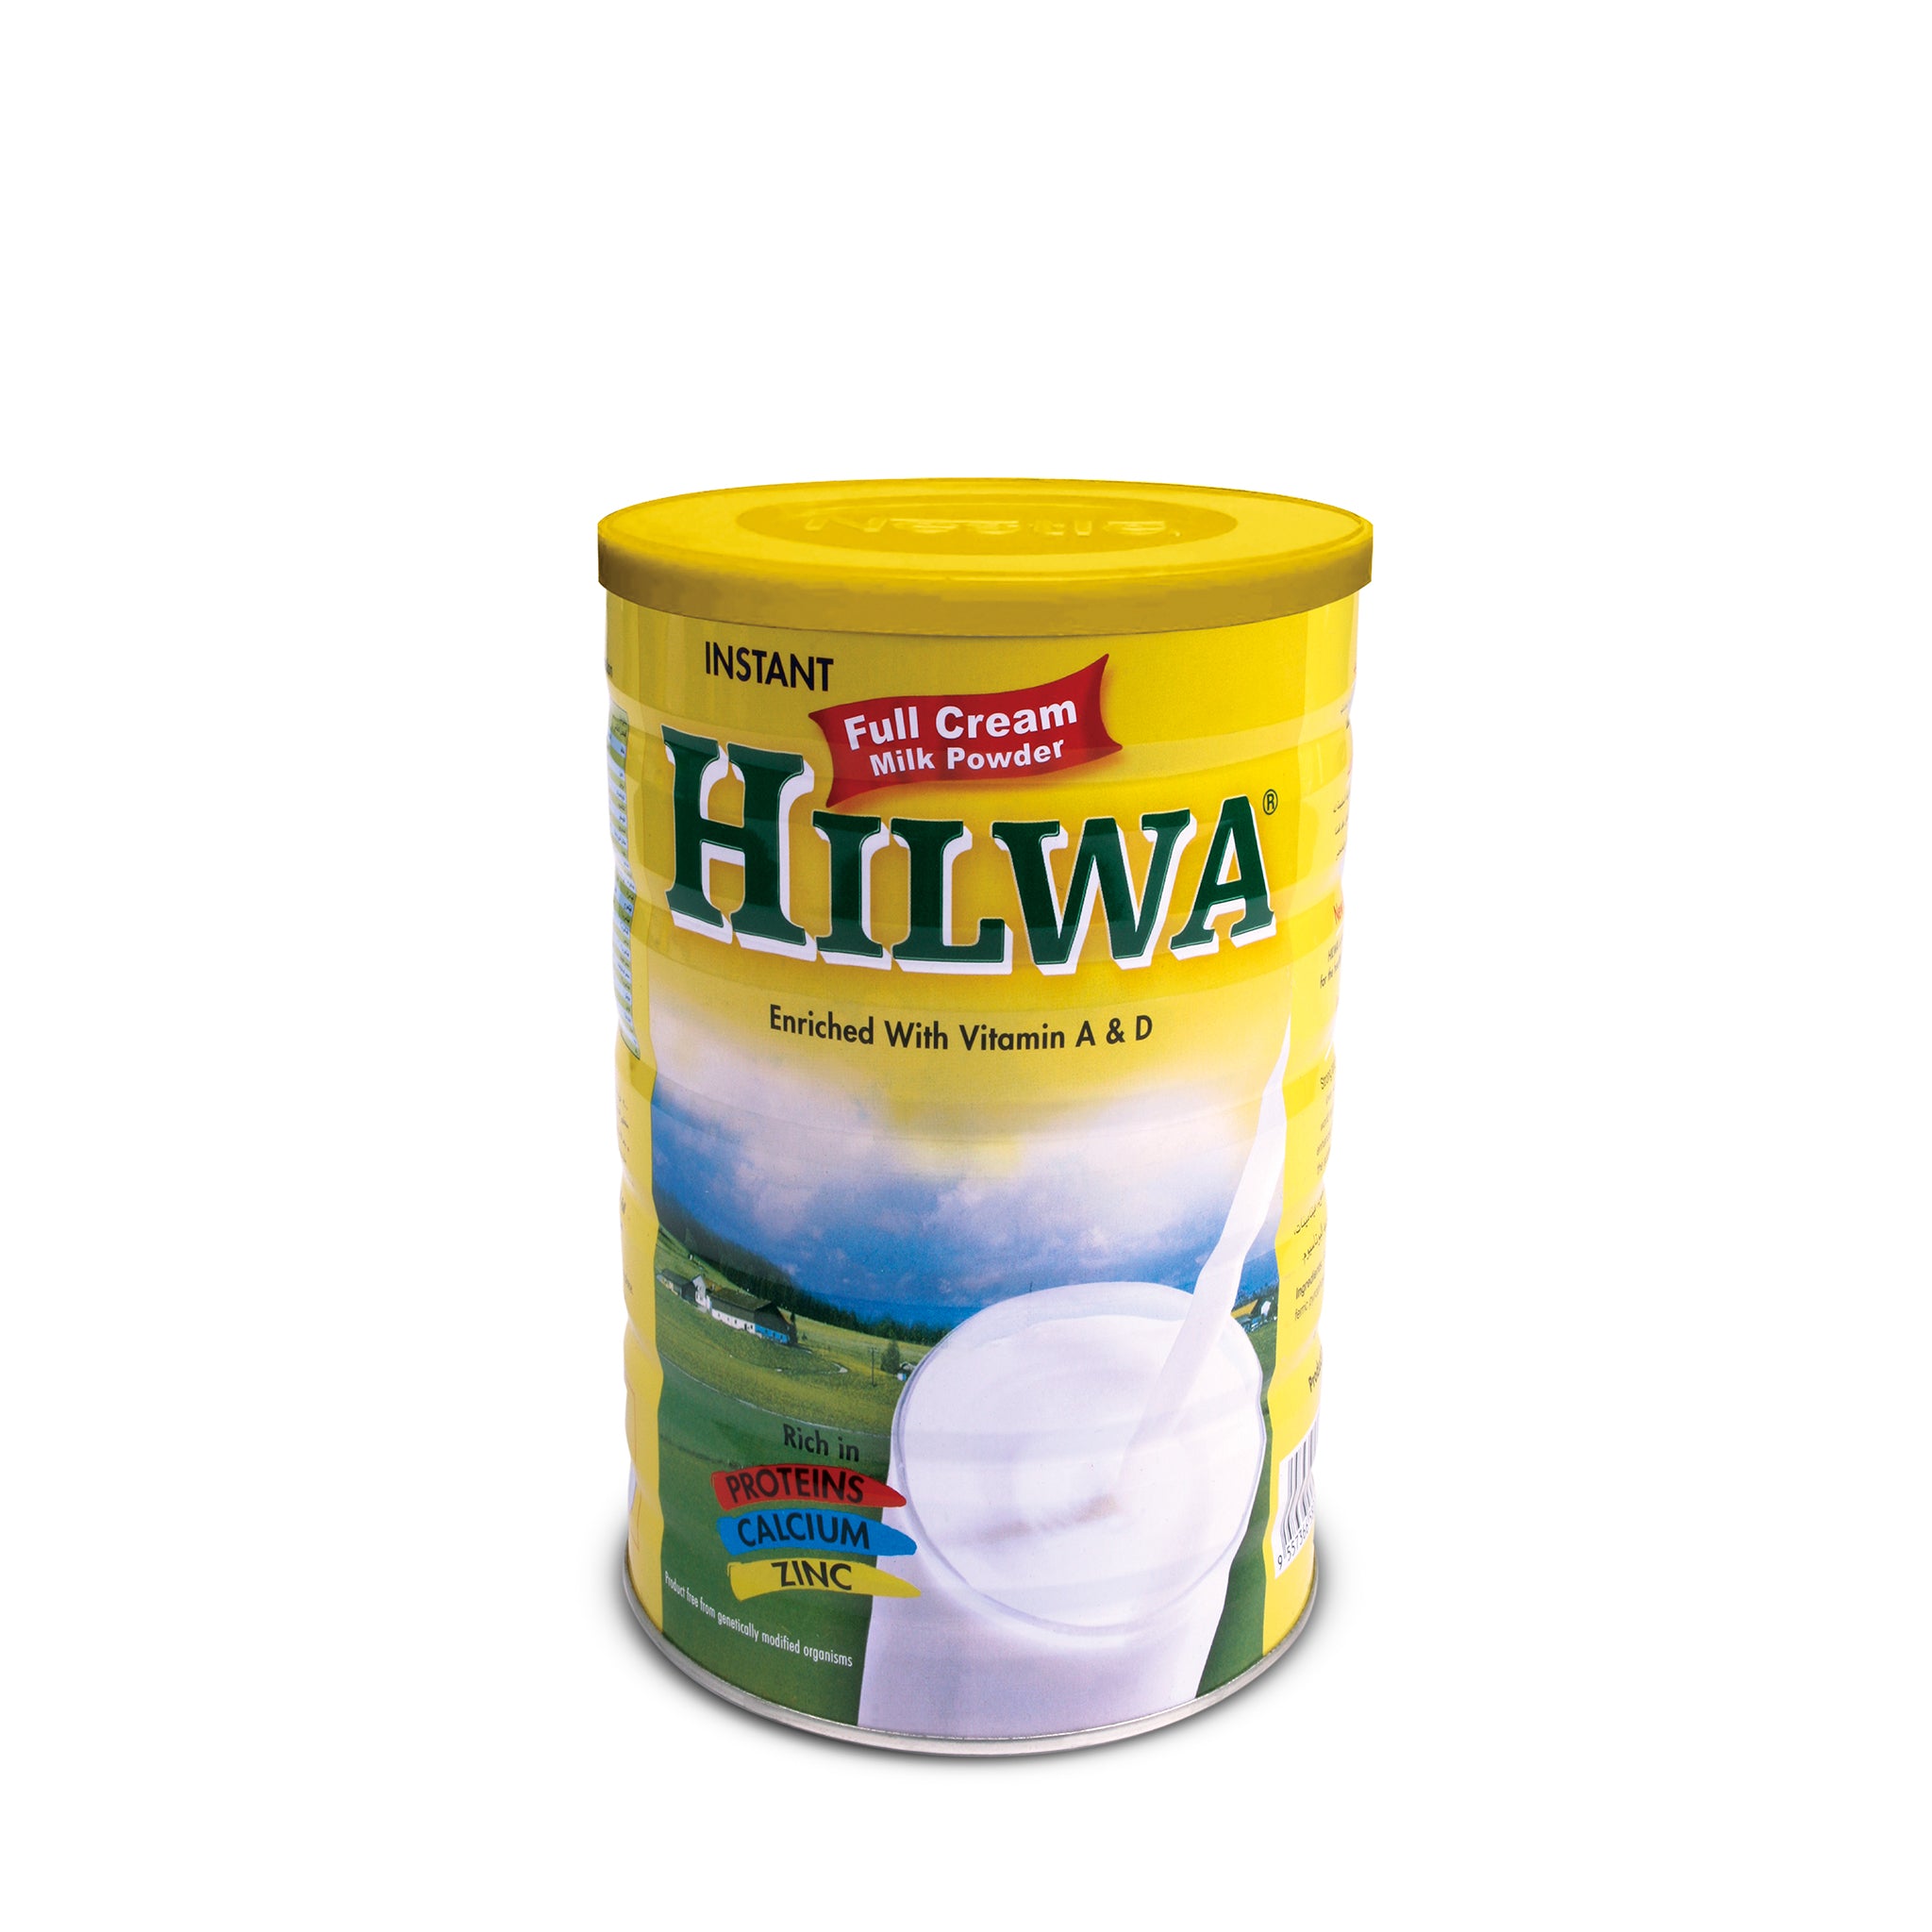 Hilwa Full Cream Milk Powder 900g